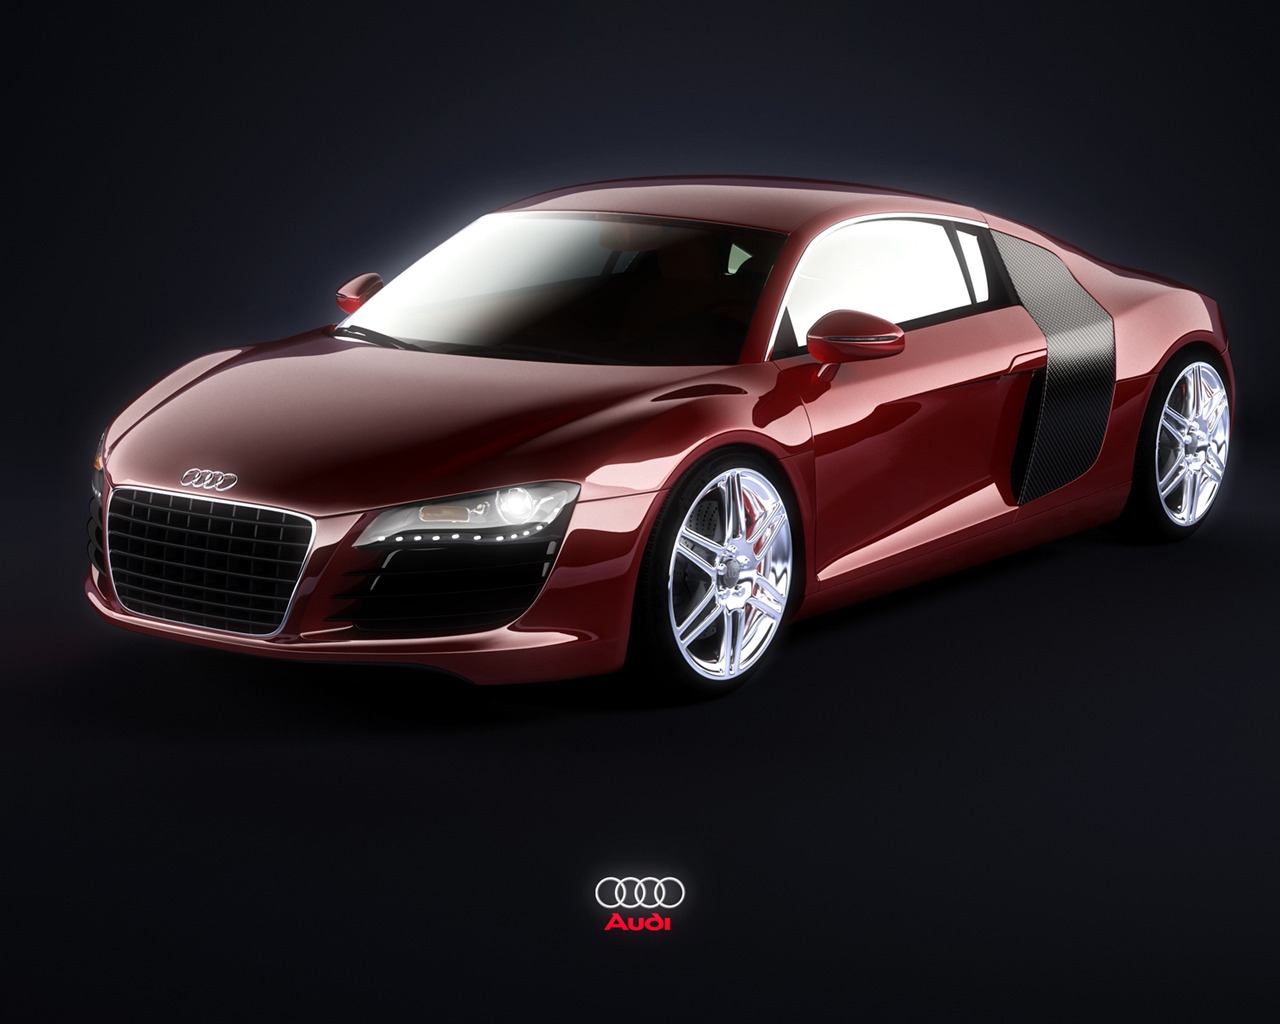 Audi R8 Burgundy for 1280 x 1024 resolution